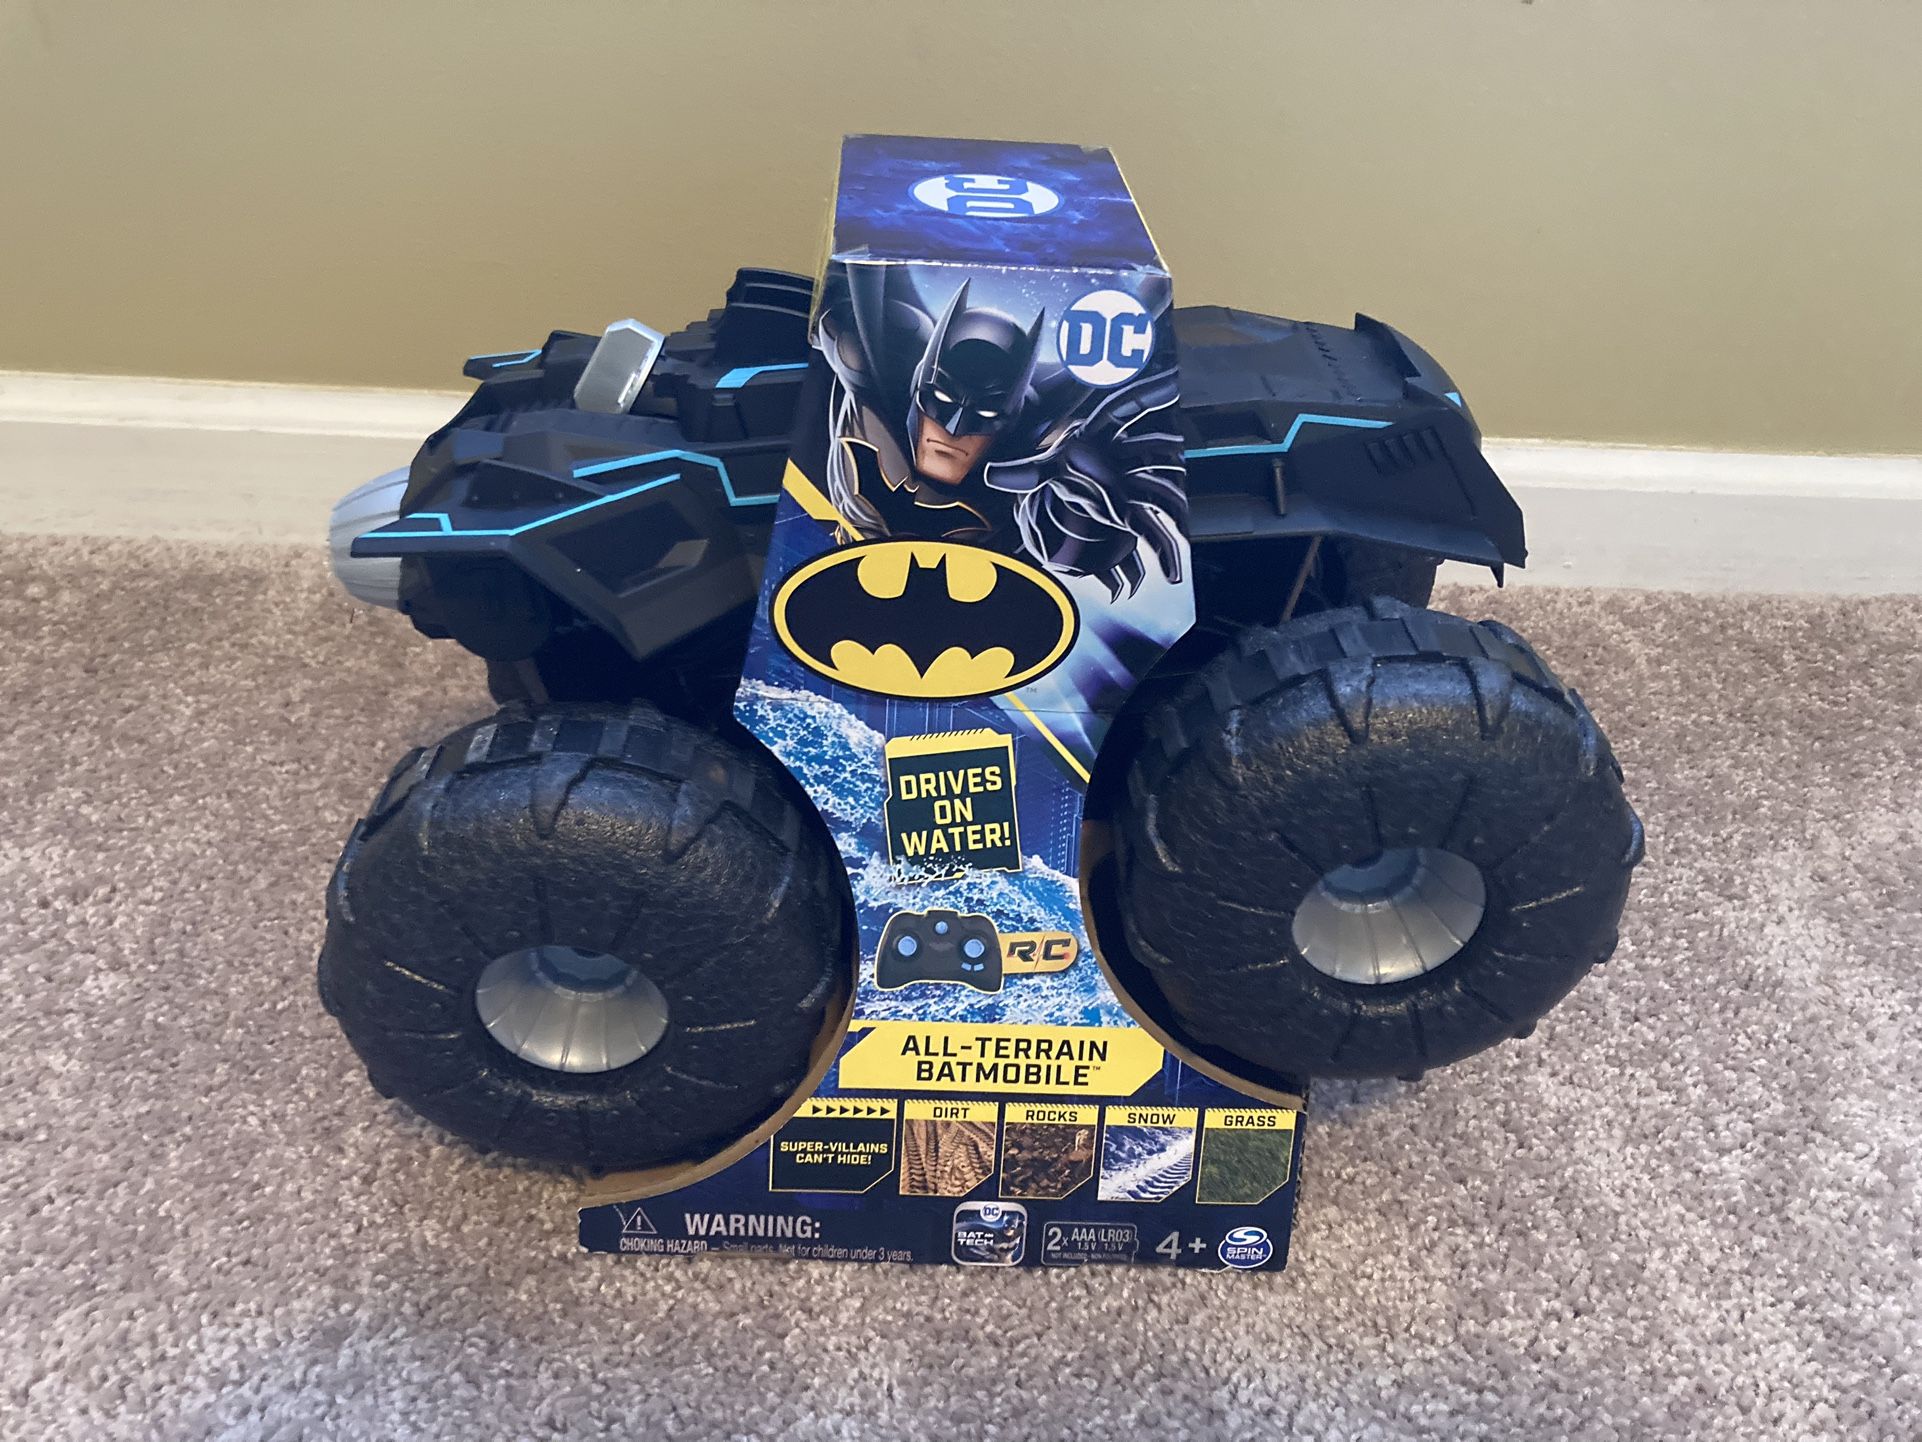 R/C Batman Truck Toy